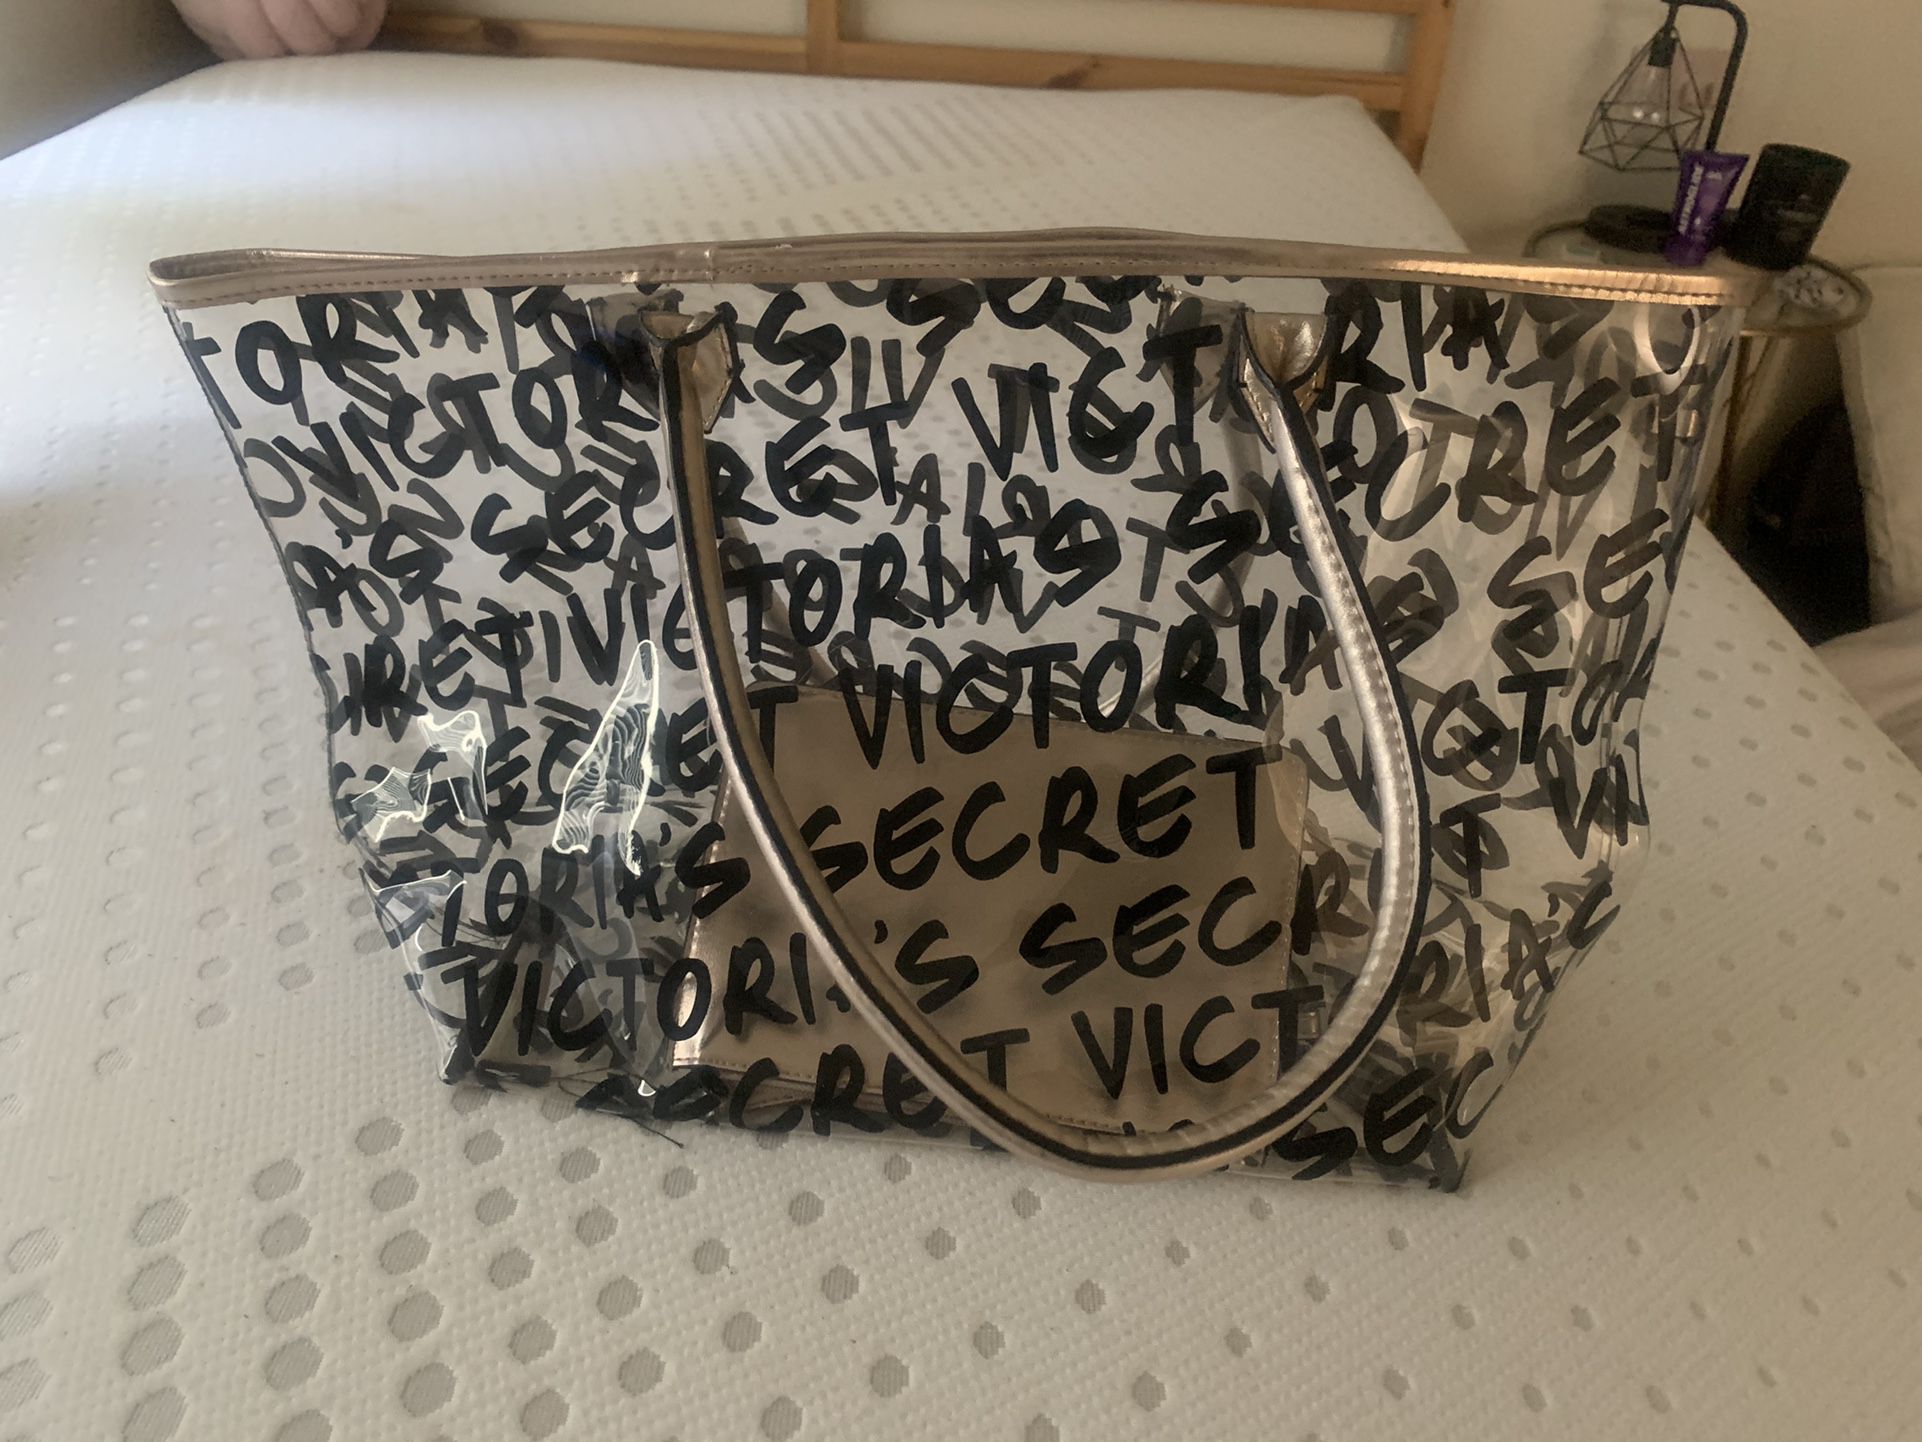 VICTORIA SECRET TOTE BAG for Sale in Decatur, GA - OfferUp